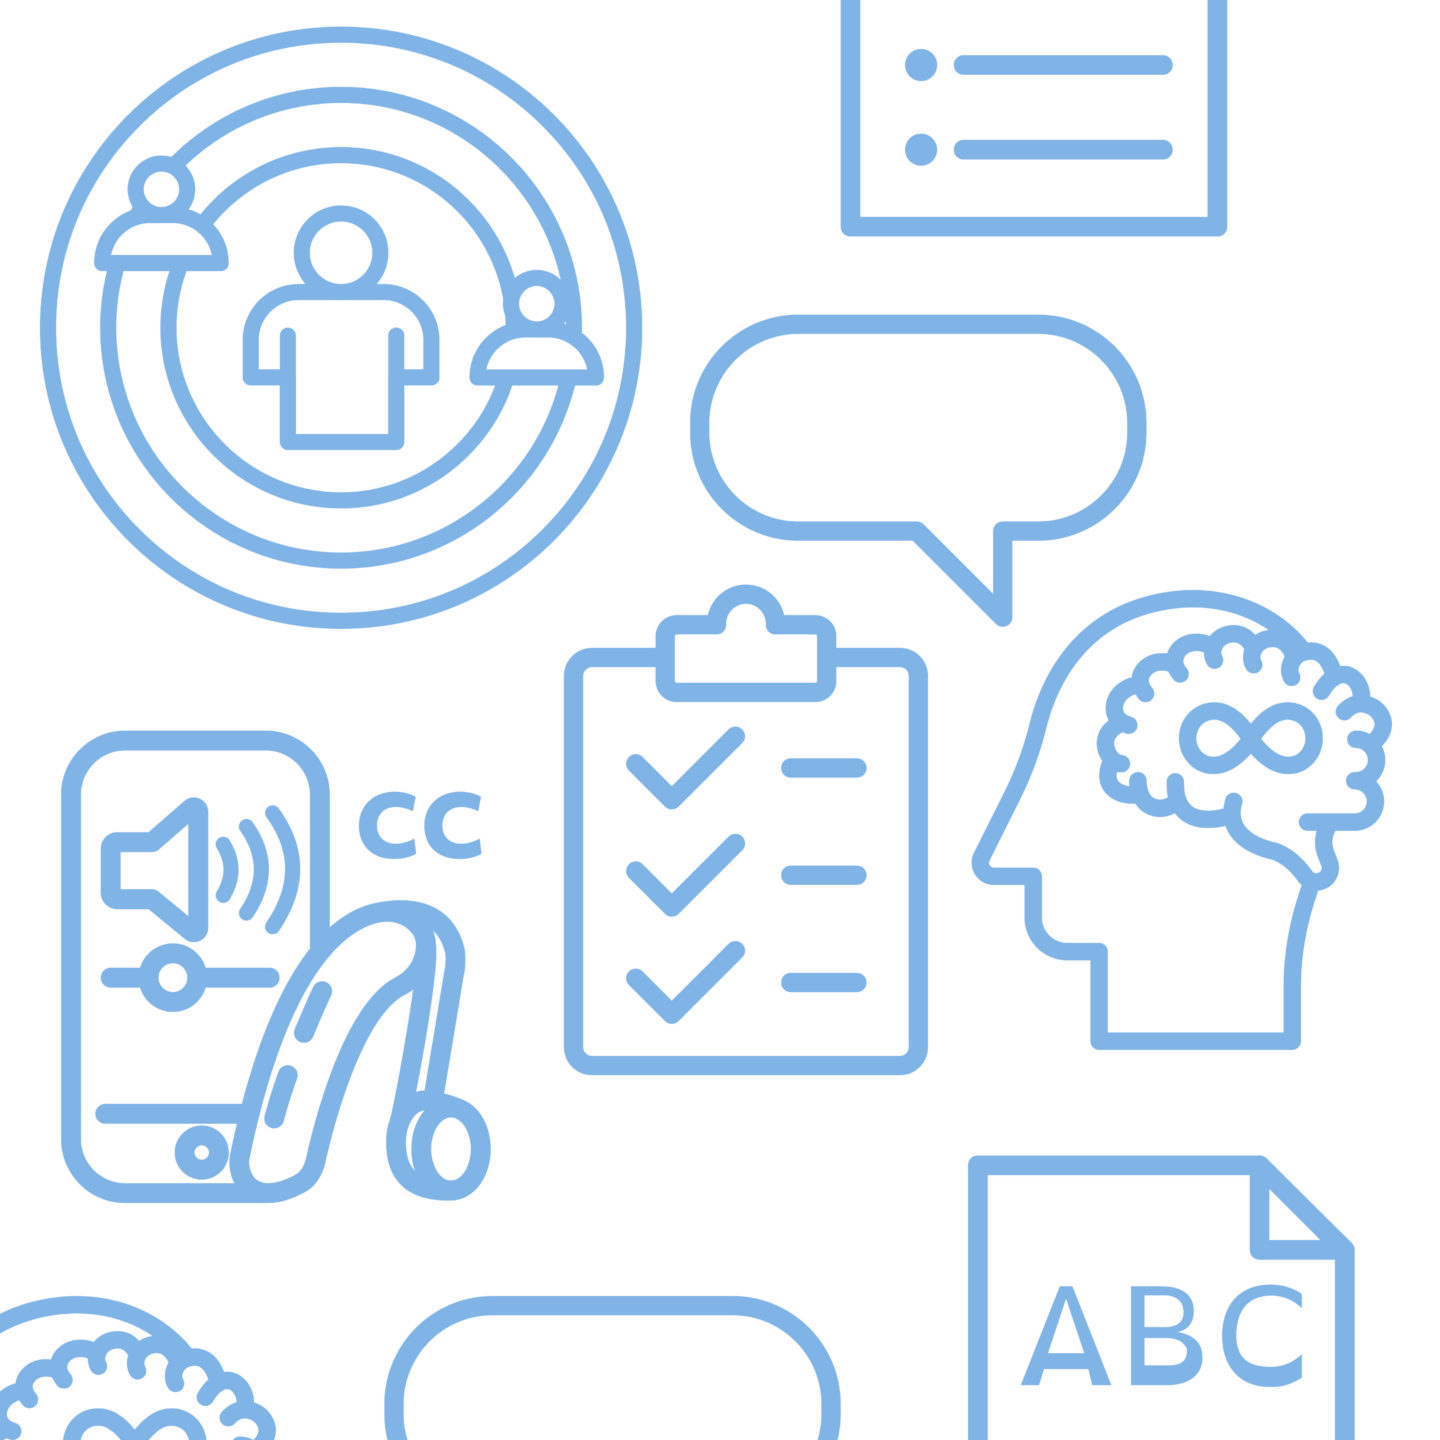 Recruitment, checklist, accessible technology, and neurodiversity symbols.